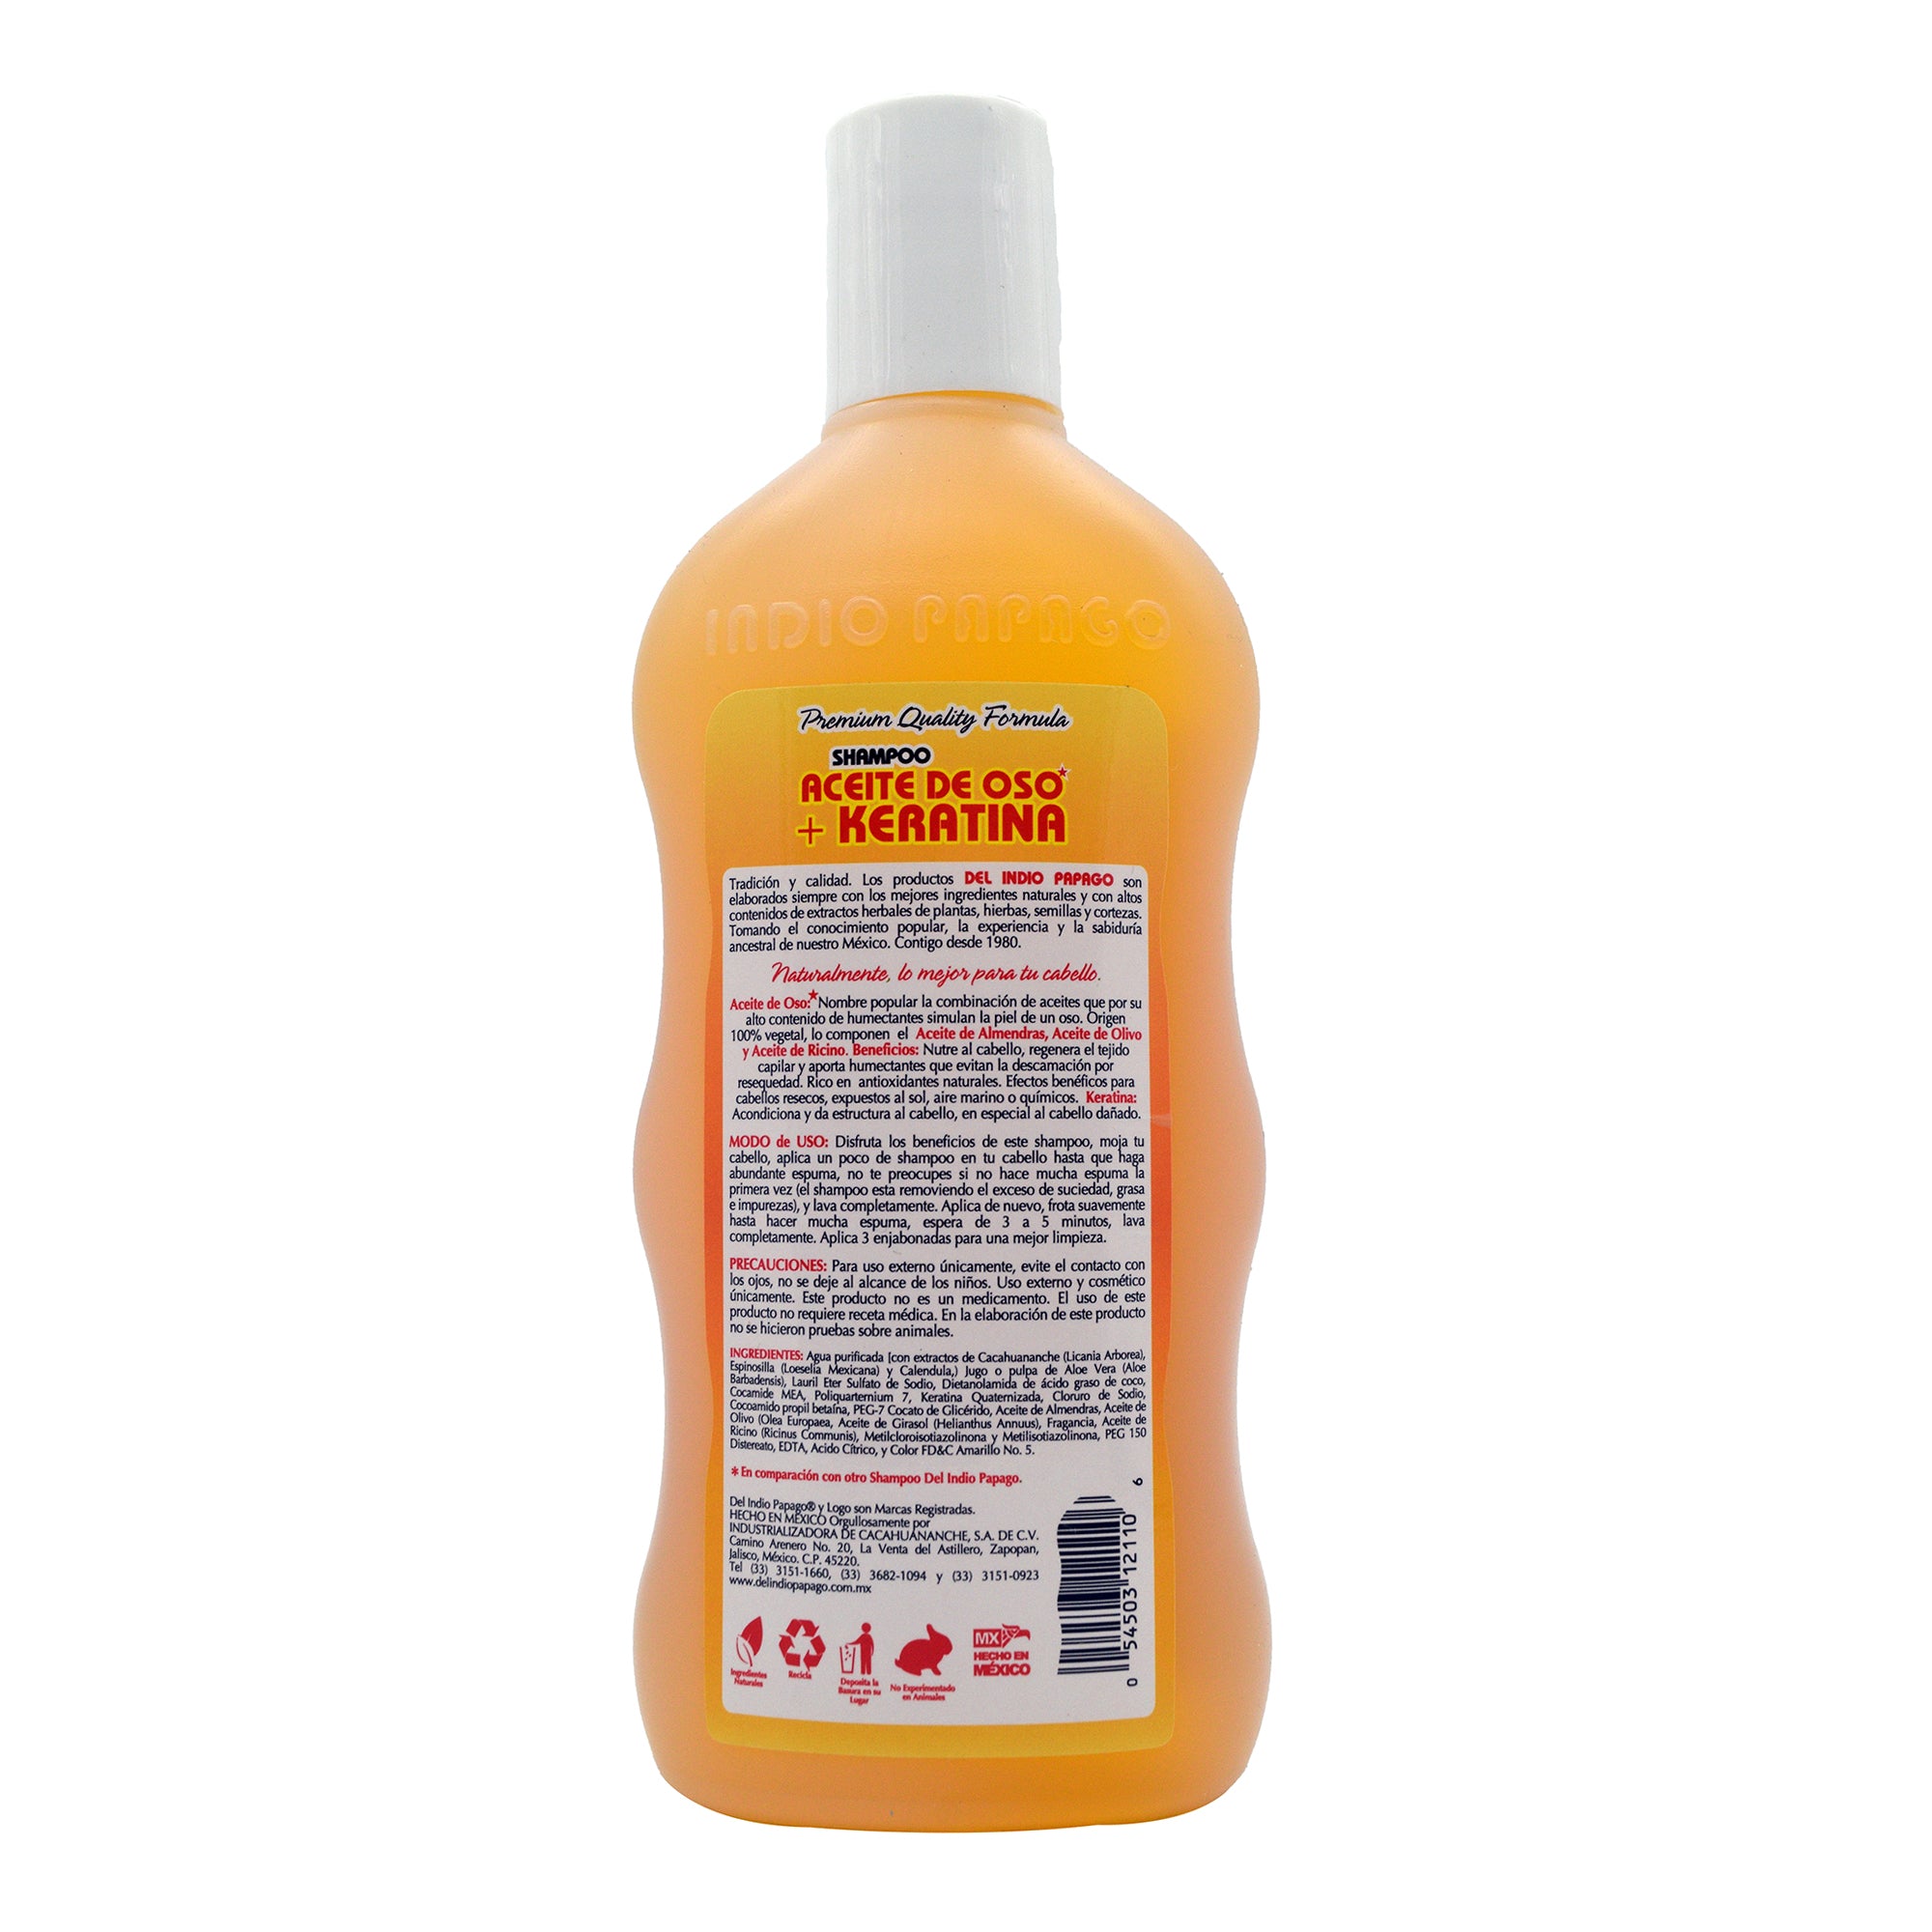 Shampoo aceite de oso y keratina 550 ml